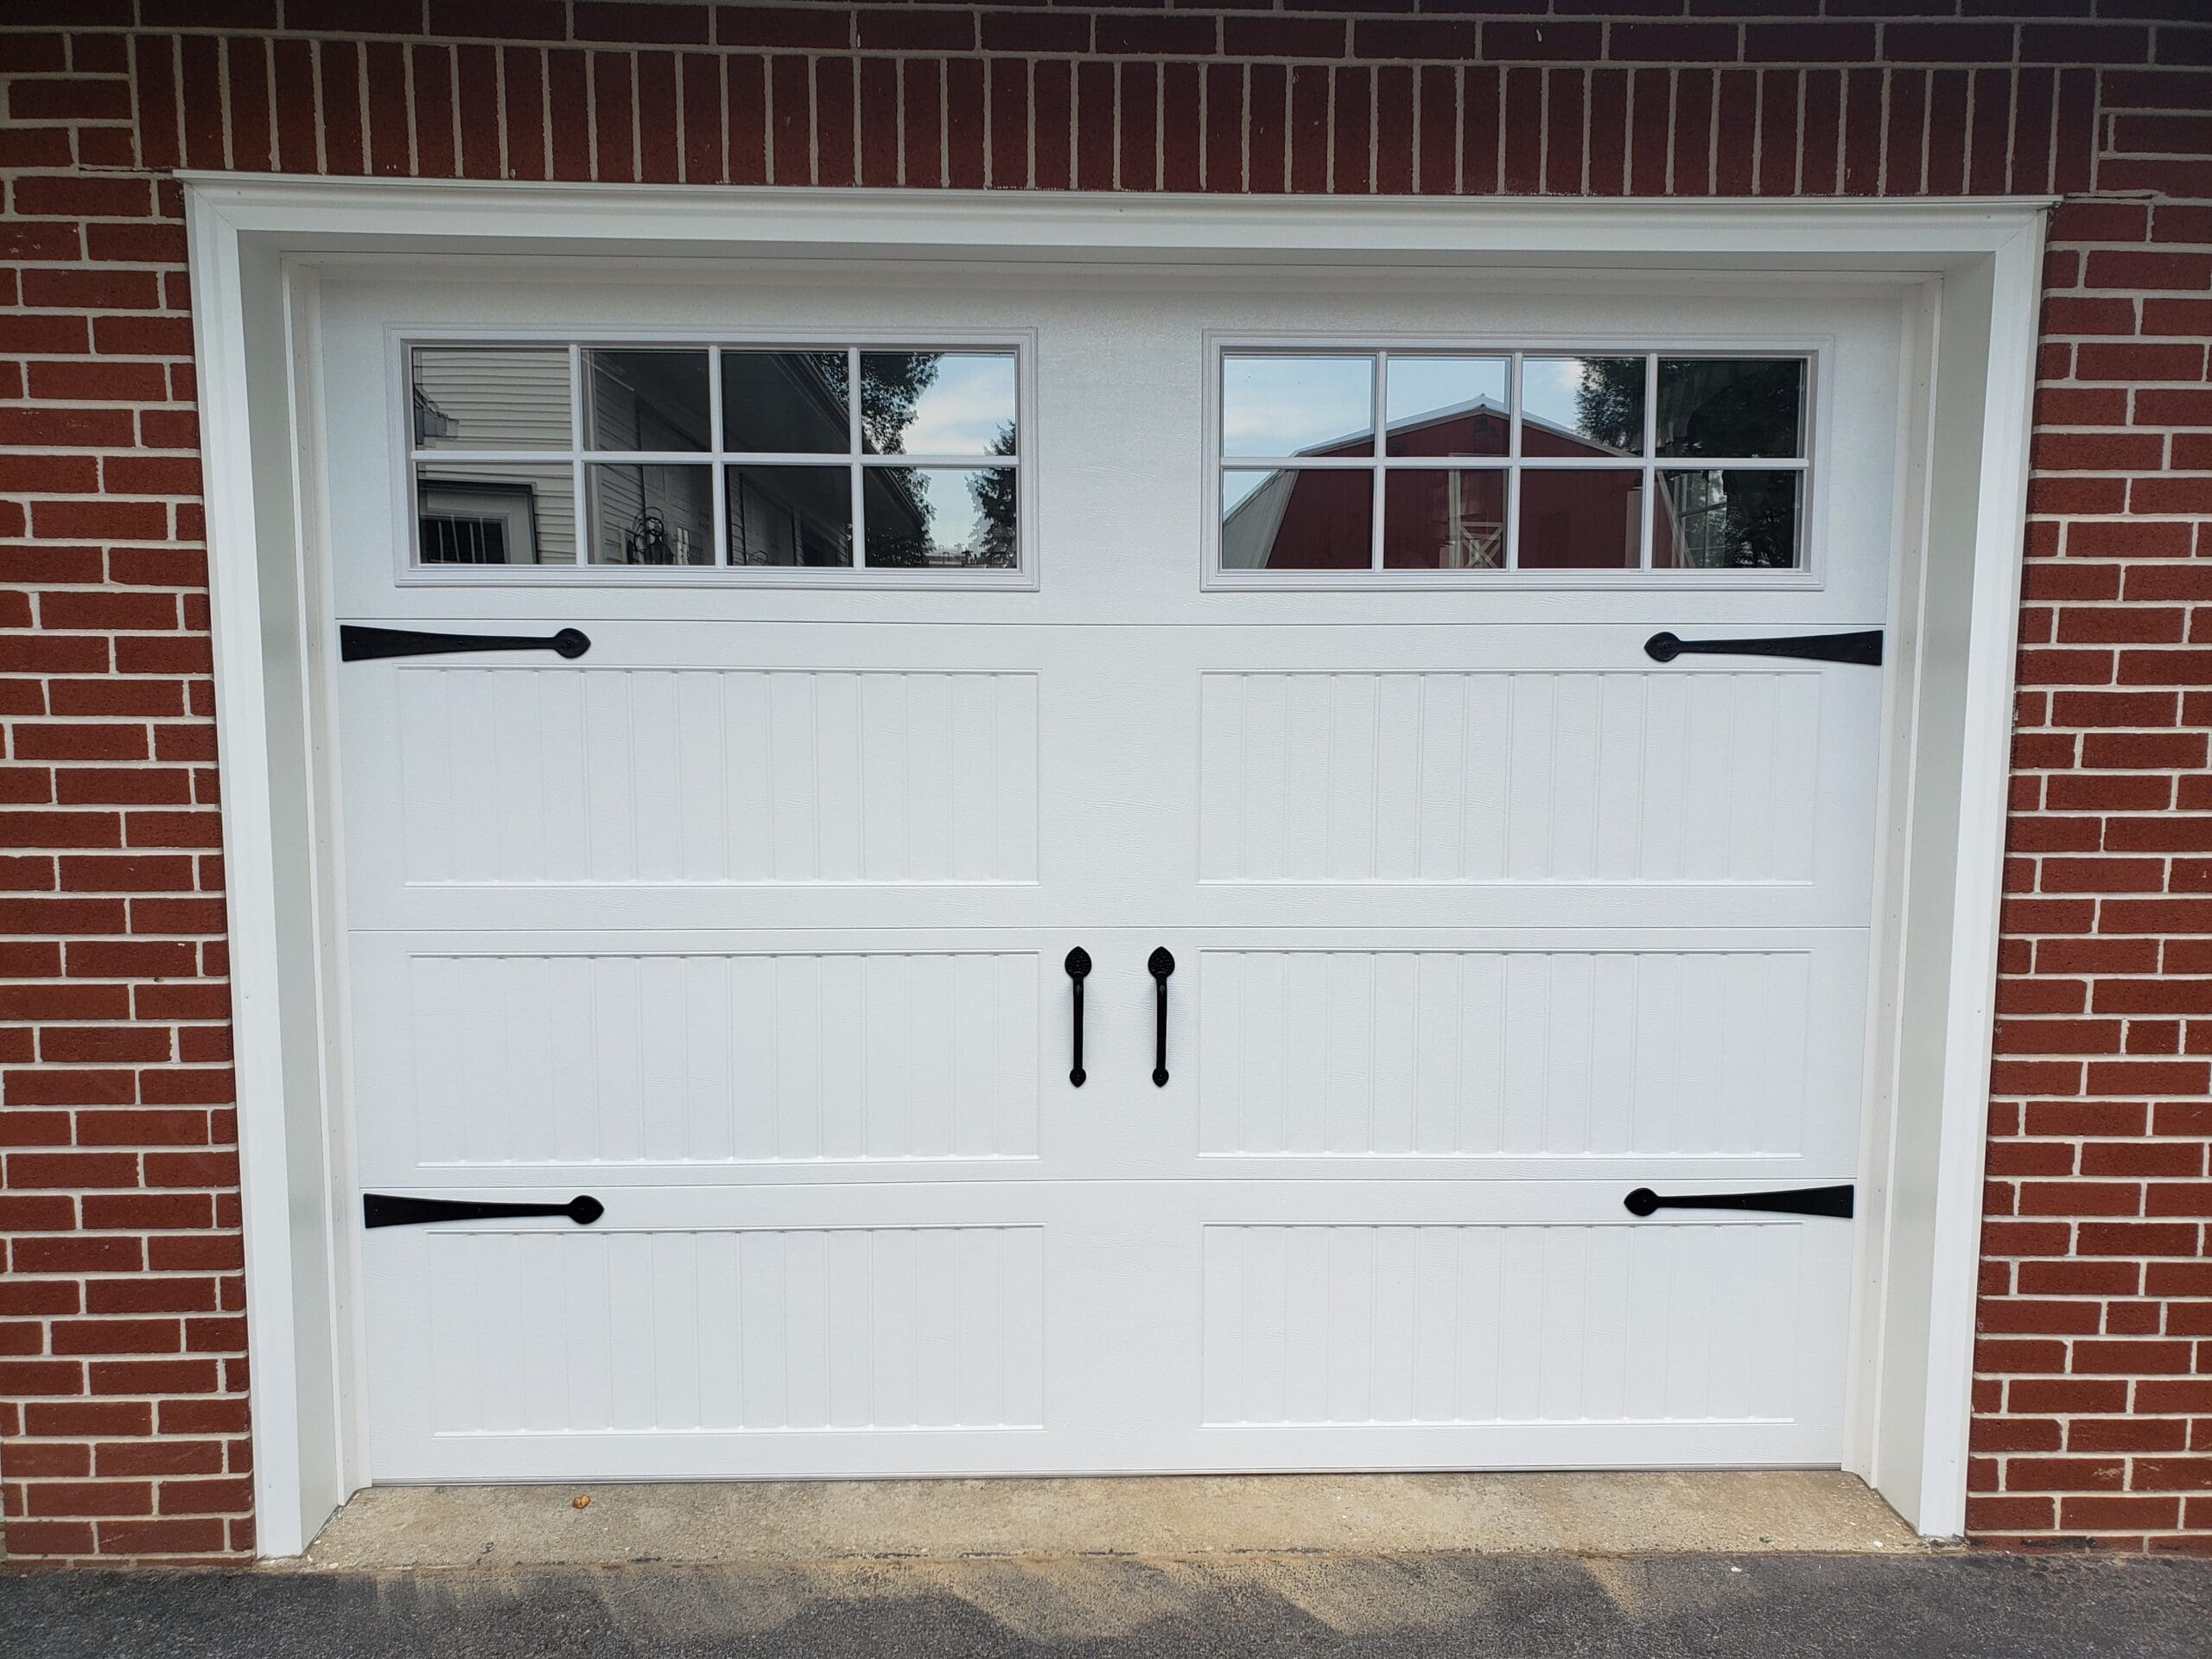 A white garage door with black handles.